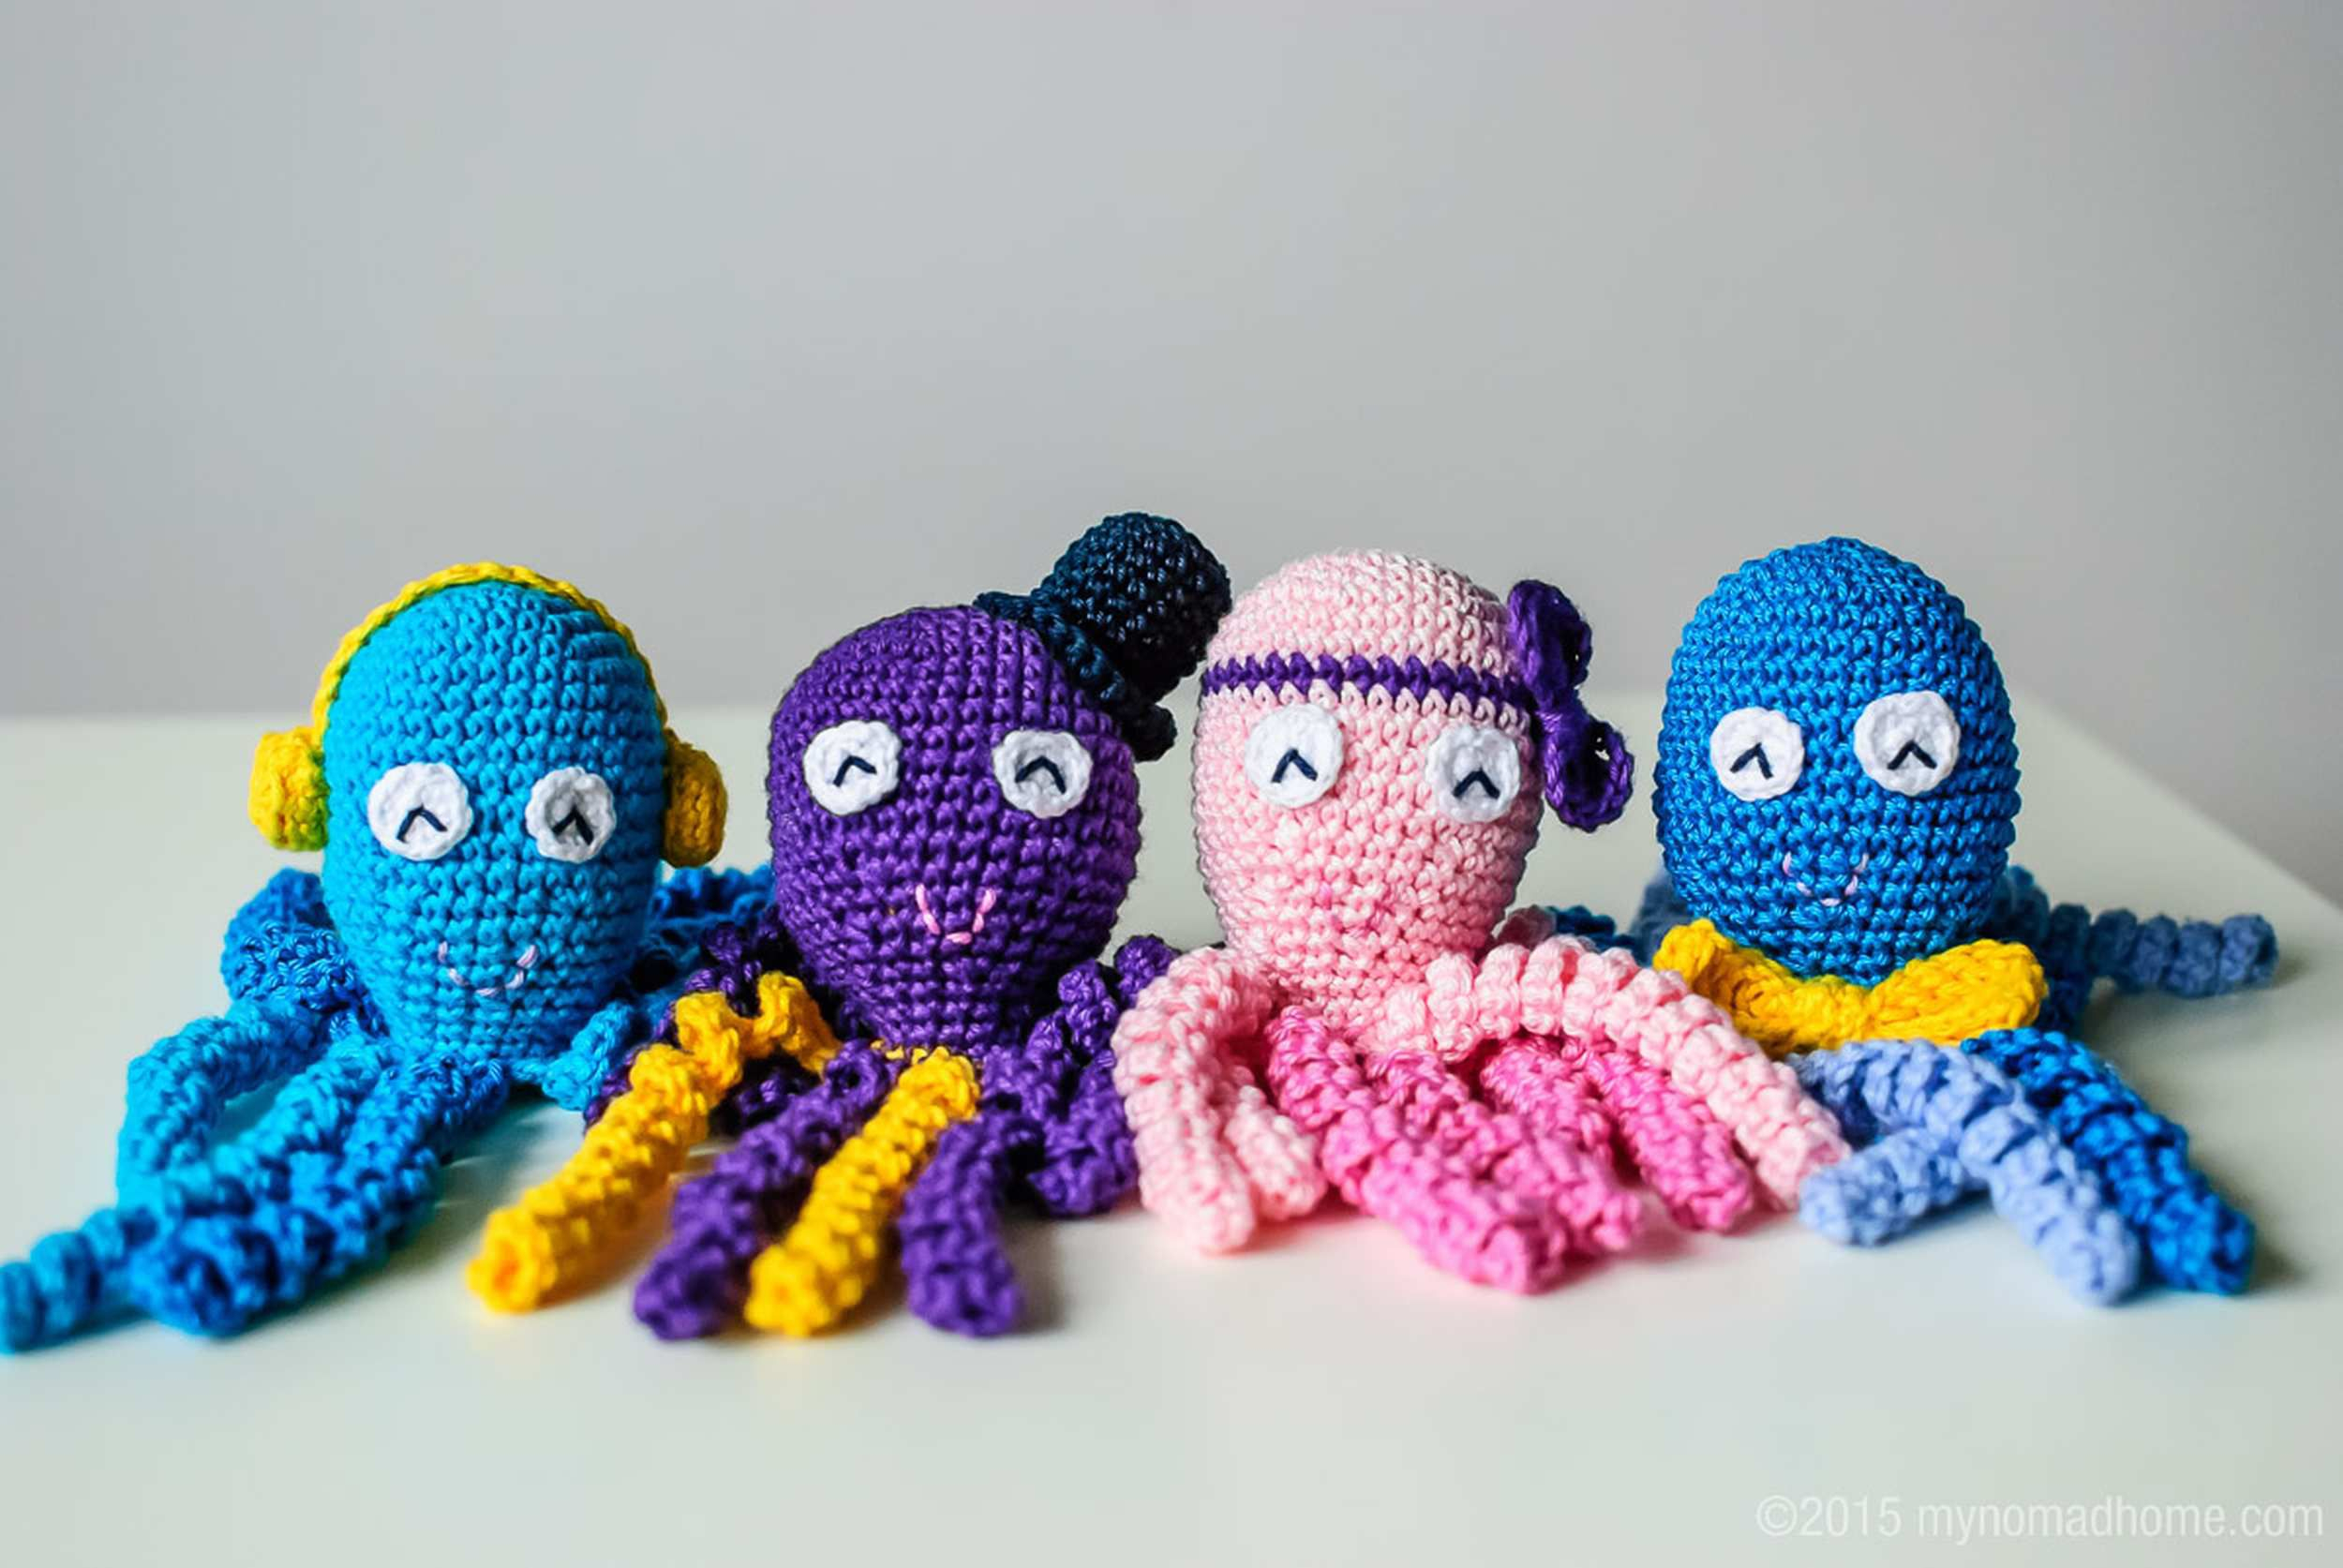 Octopus Knitting Pattern 10 Crochet Octopus Patterns To Make For Preemies